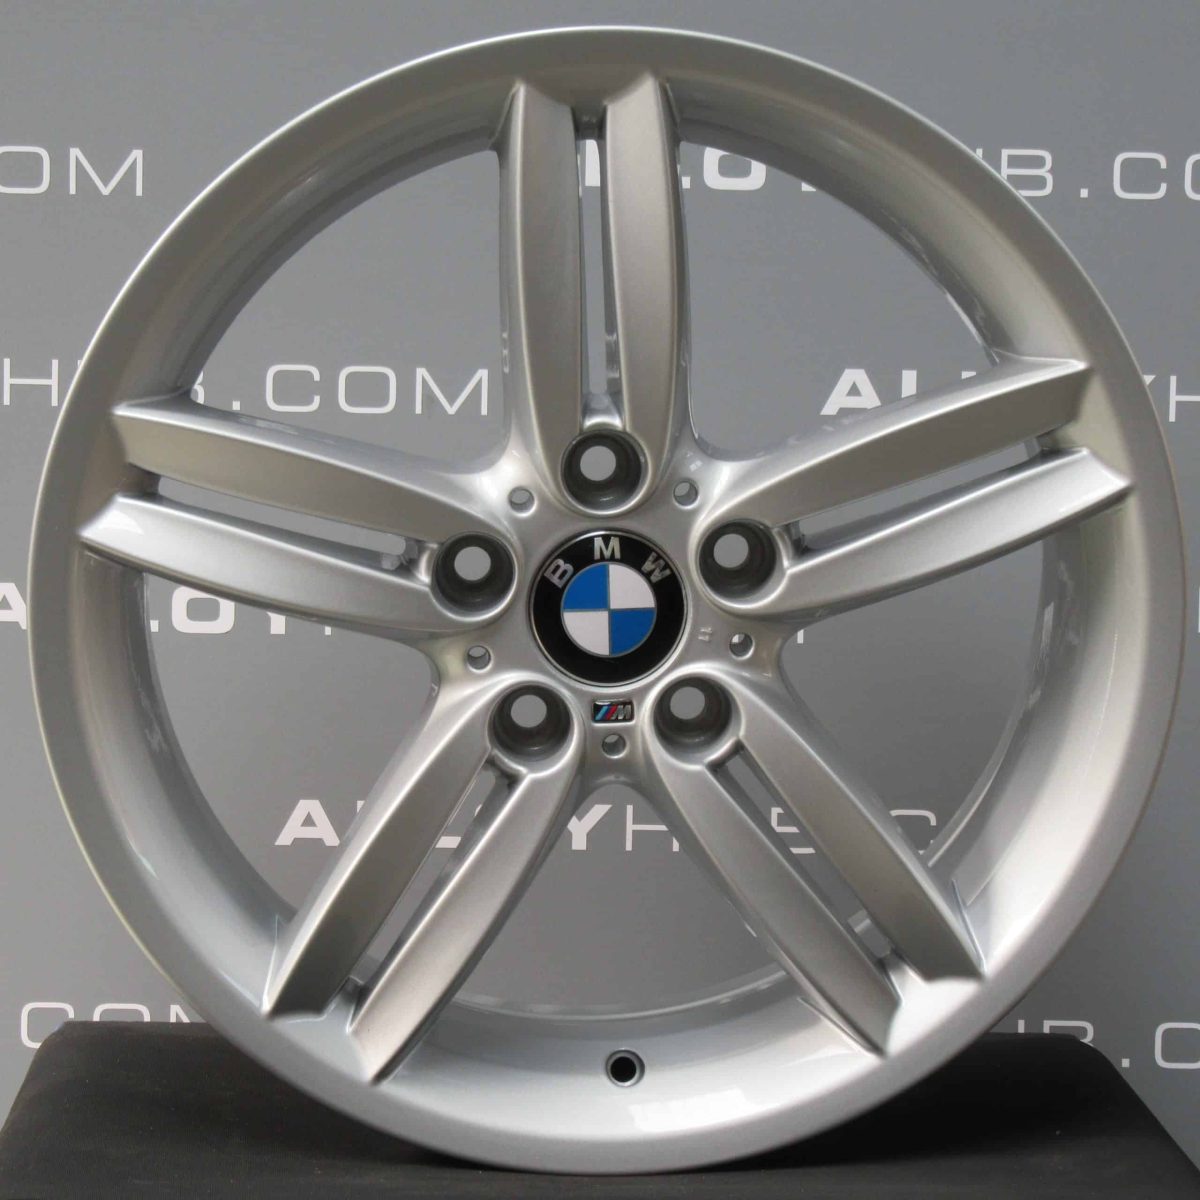 Genuine BMW 1 Series 208M Sport 5 Twin Spoke 18" Inch Alloy Wheels with Silver Finish 36118036939 36117839305